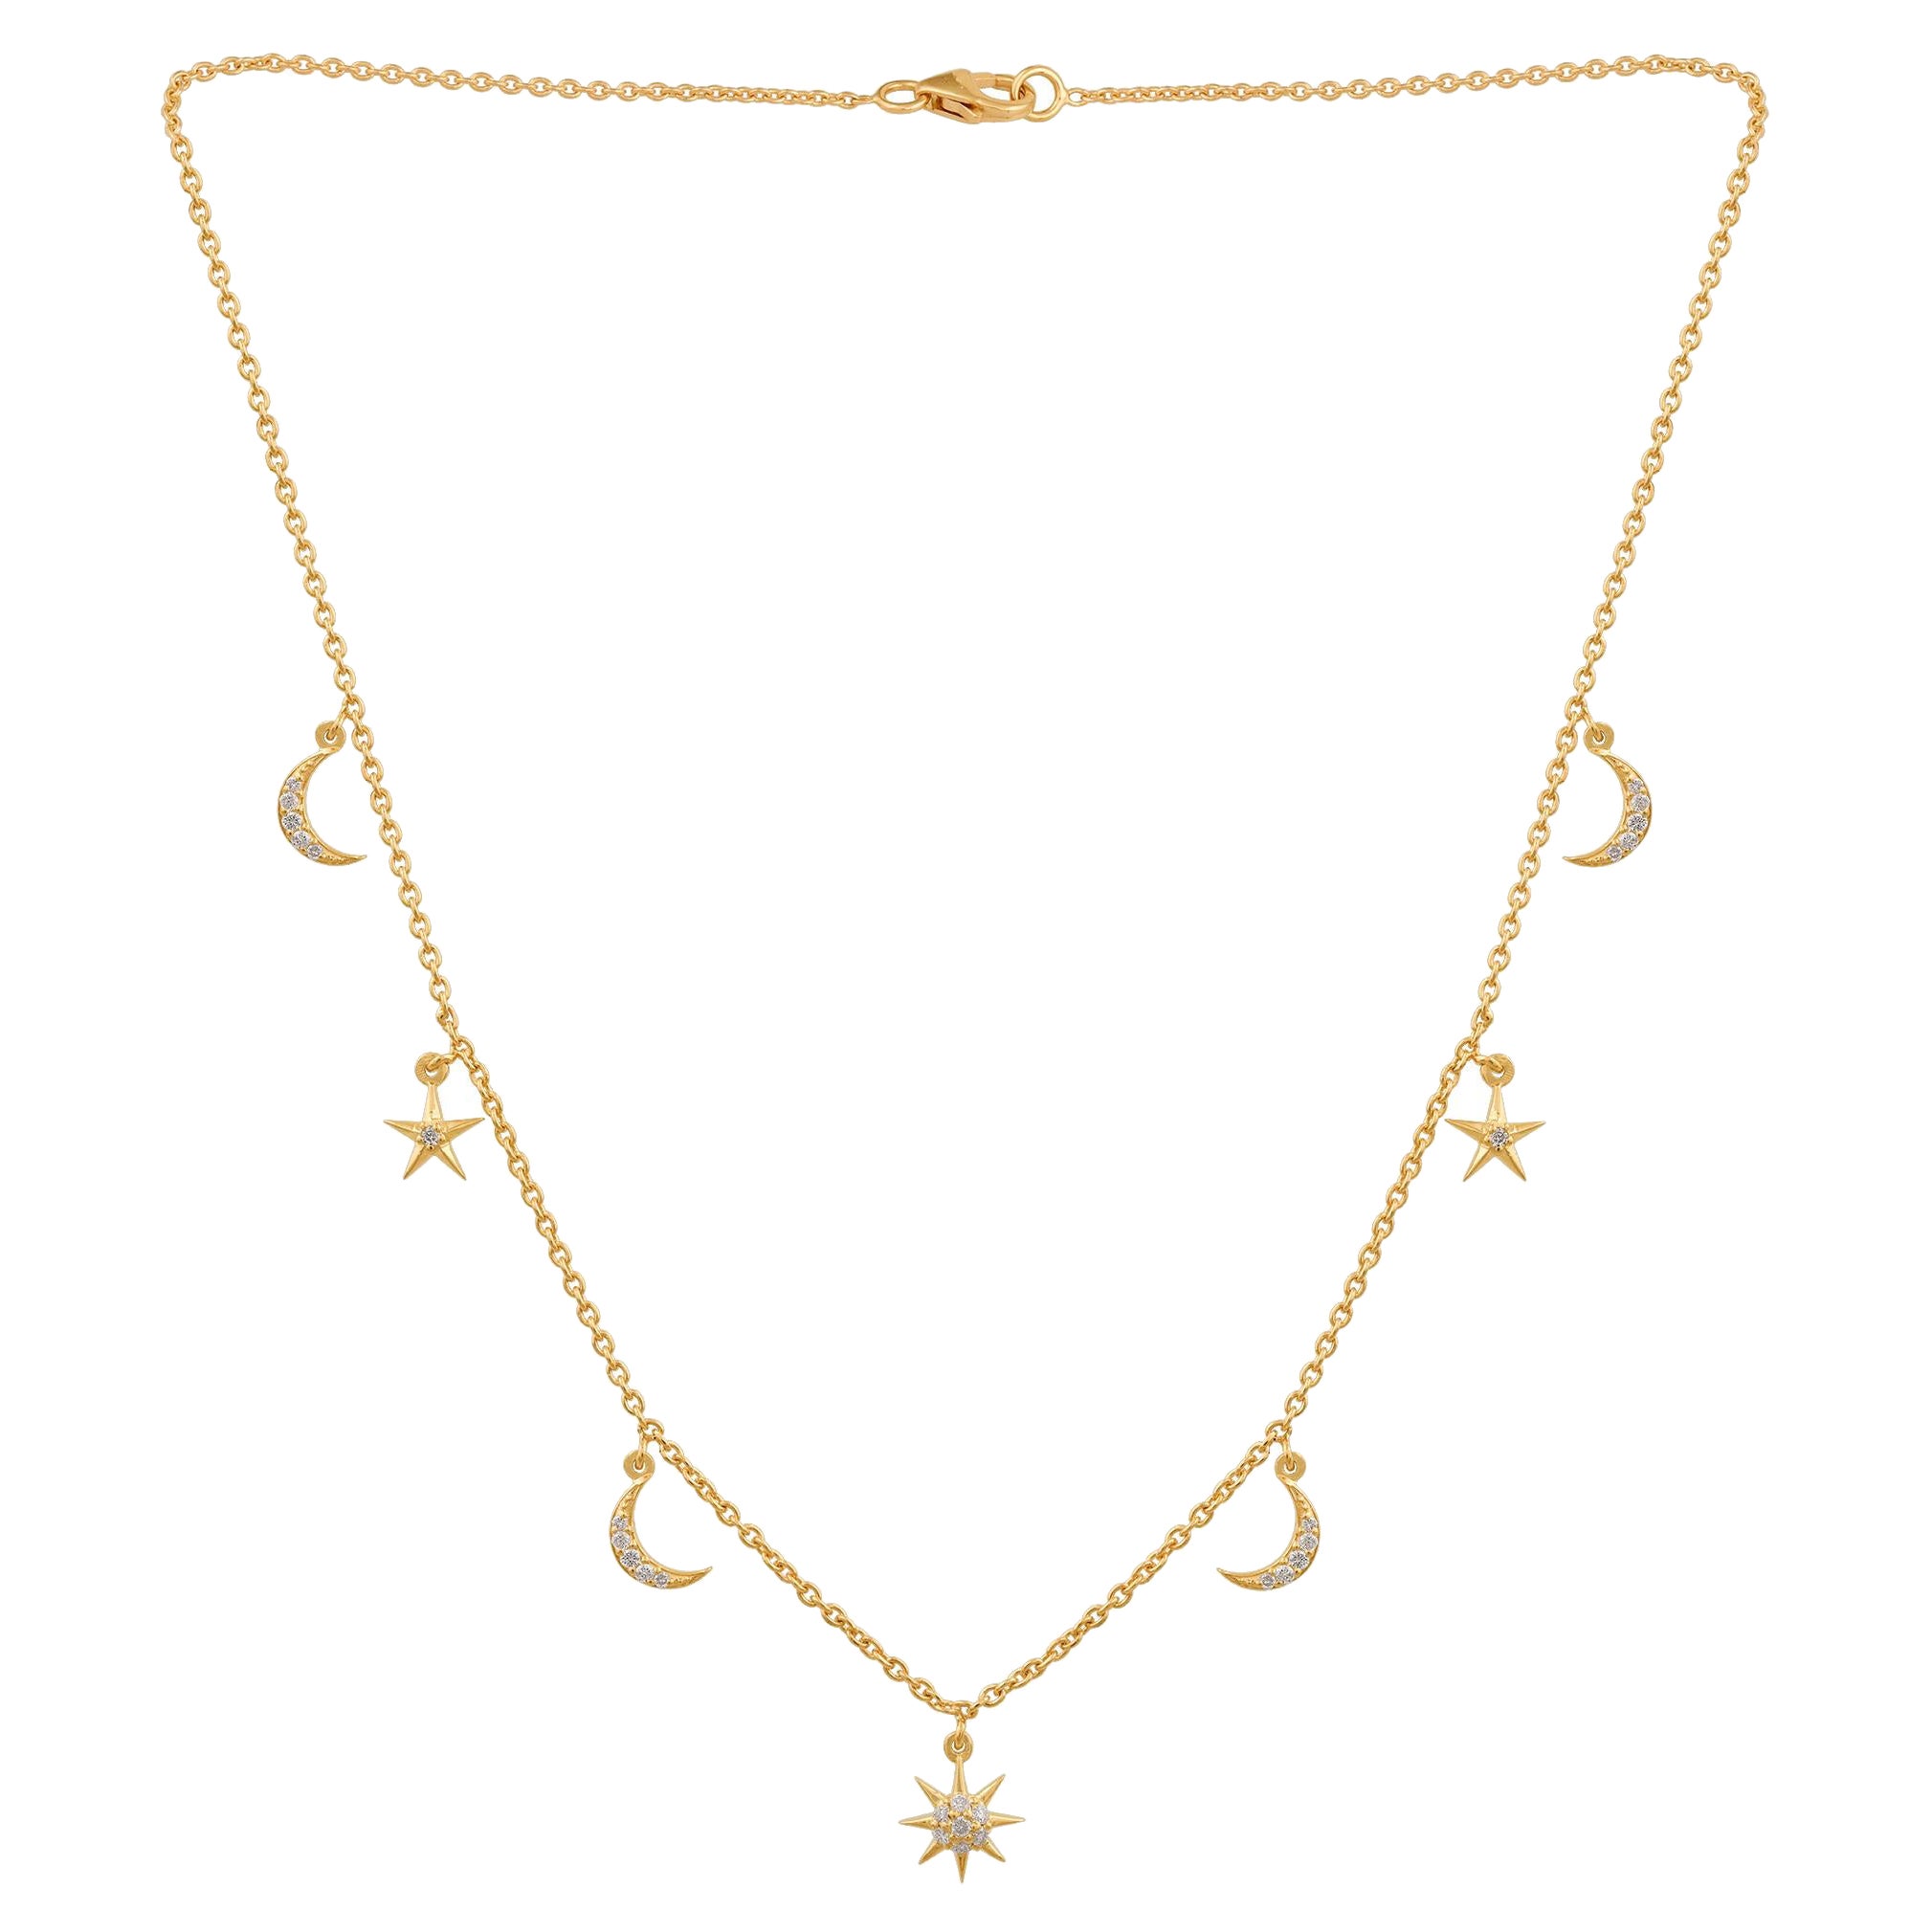 SI Clarity HI Color Diamond Moon Starburst Charm Necklace 14 Karat Yellow Gold